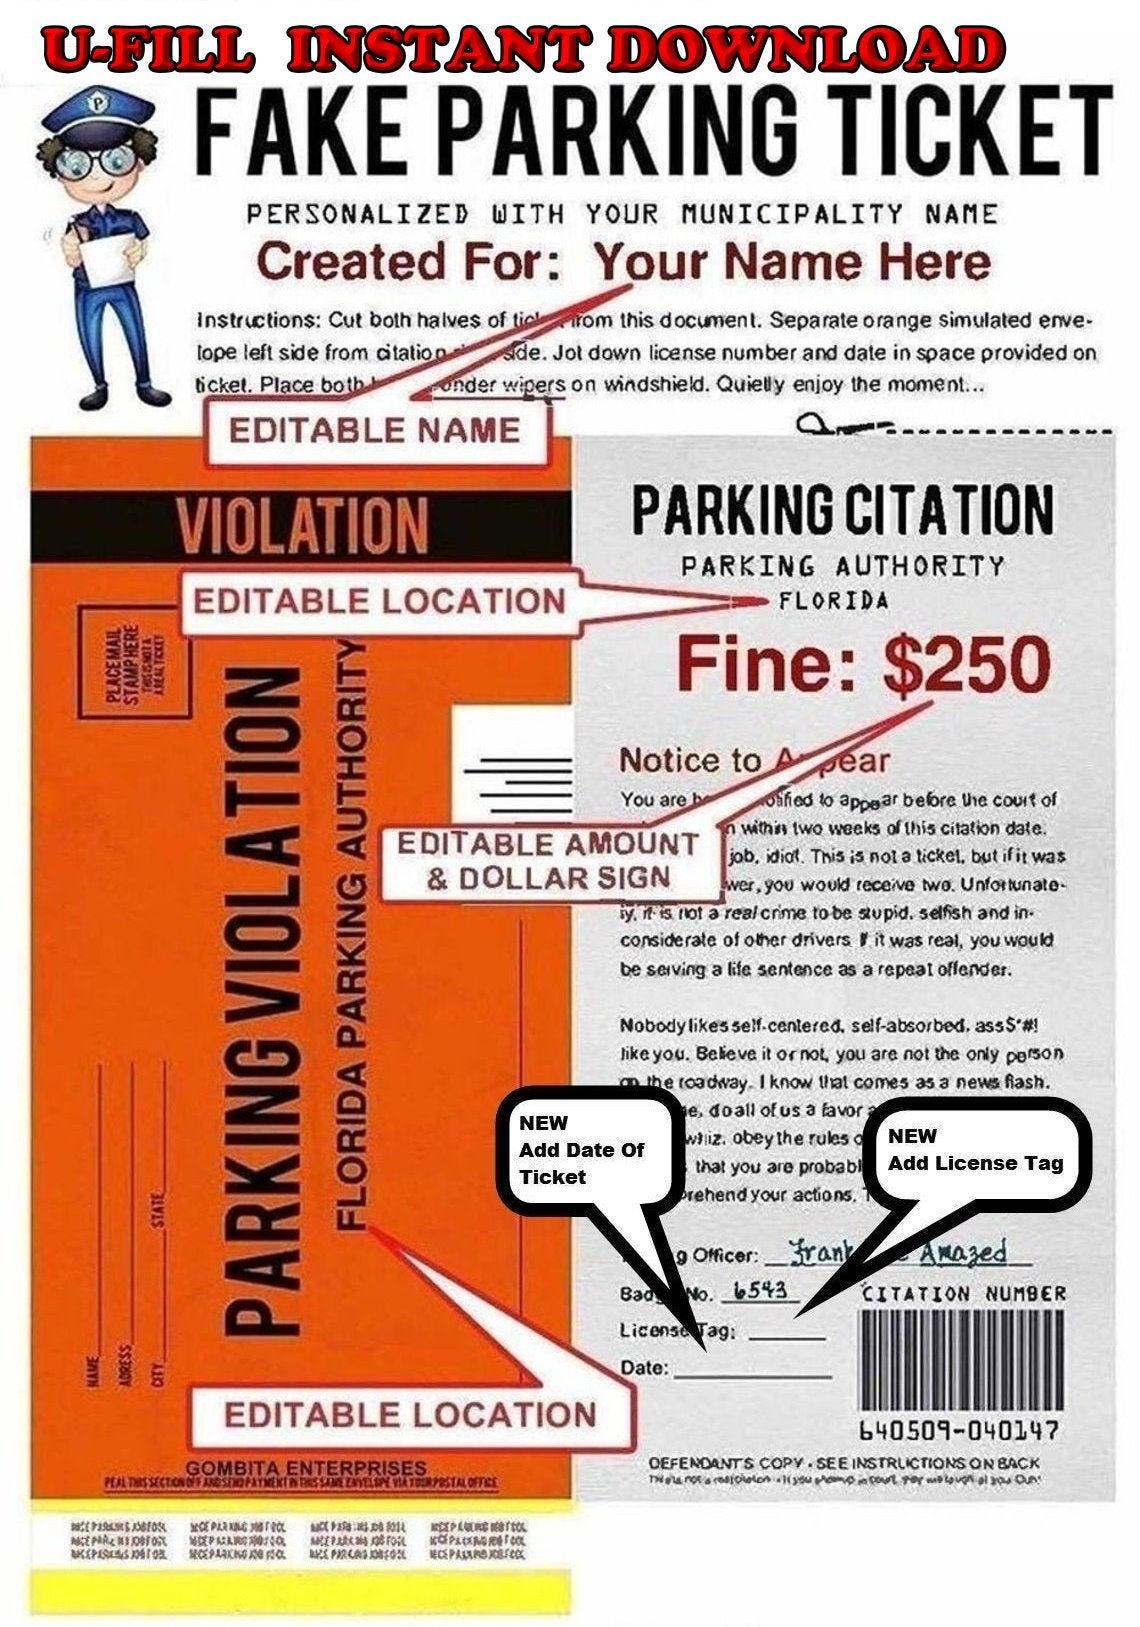 Fake Parking Ticket - U-Fill Instant Download PDF